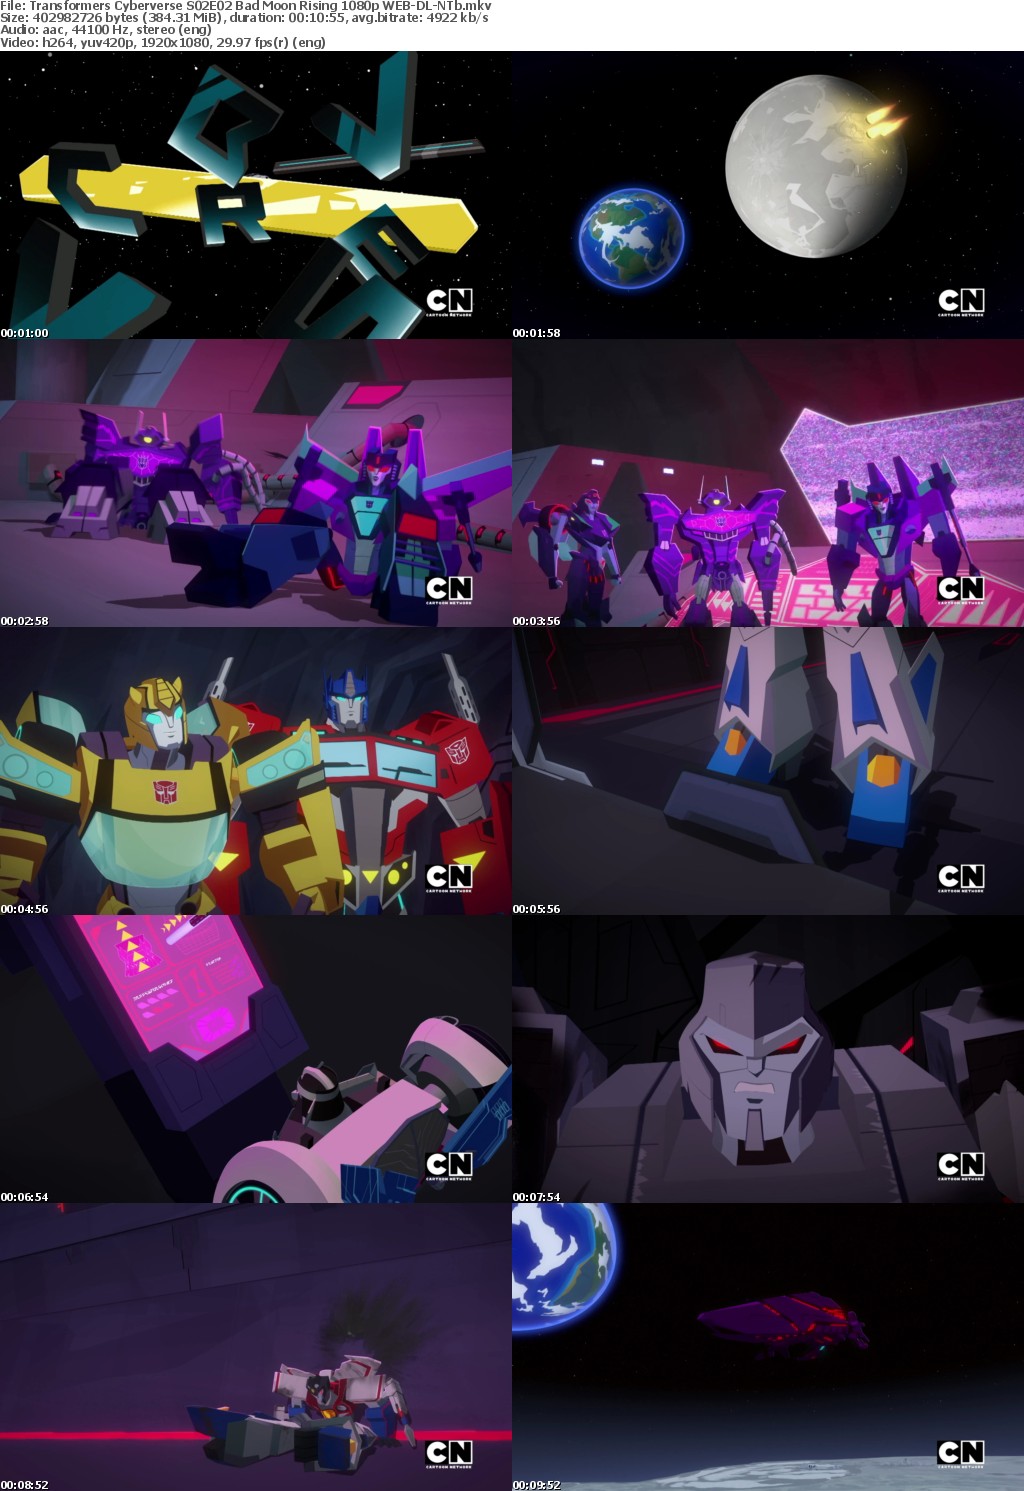 Transformers Cyberverse S02E02 Bad Moon Rising 1080p WEB-DL-NTb